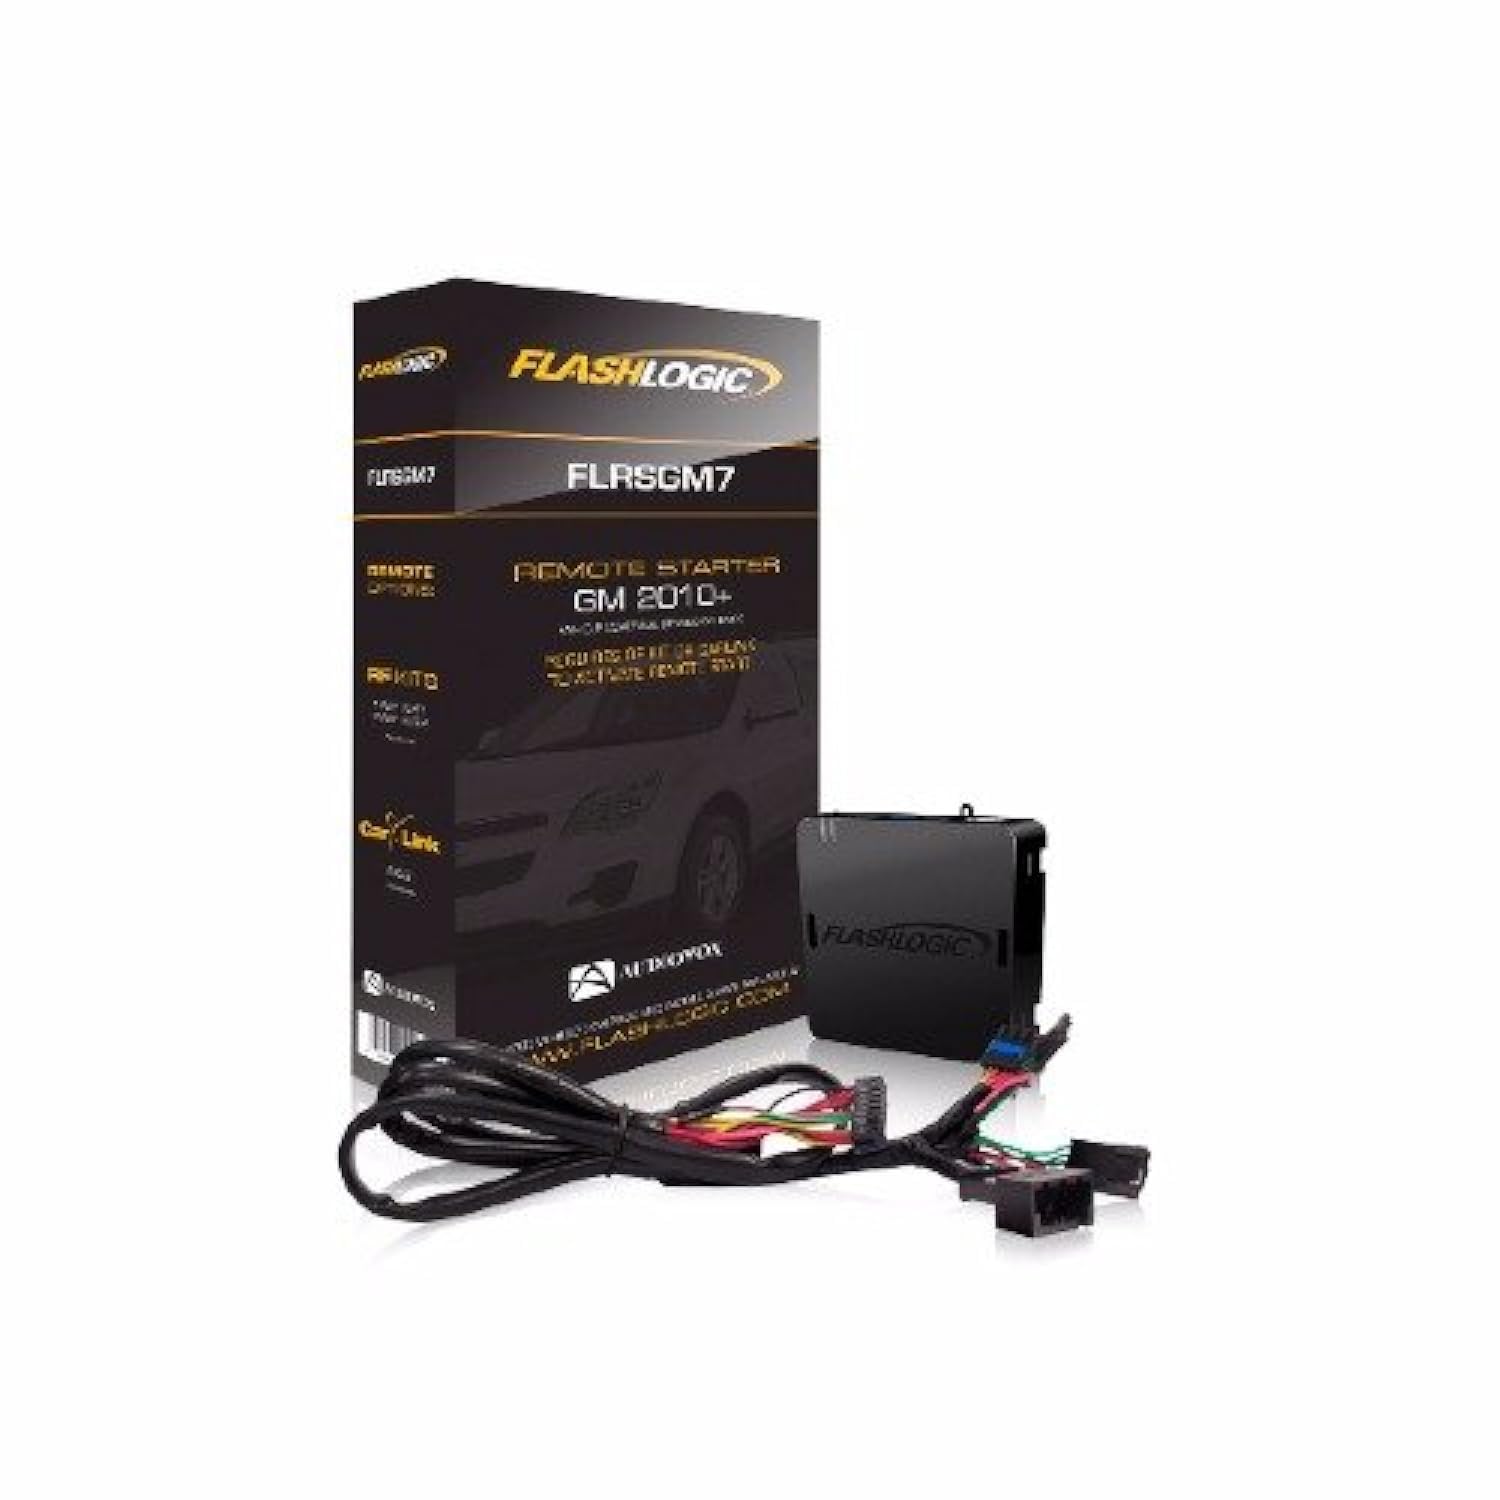 FlashLogic FLRSGM7 Plug & Play Remote Start Kit for Chevy, Buick & GMC